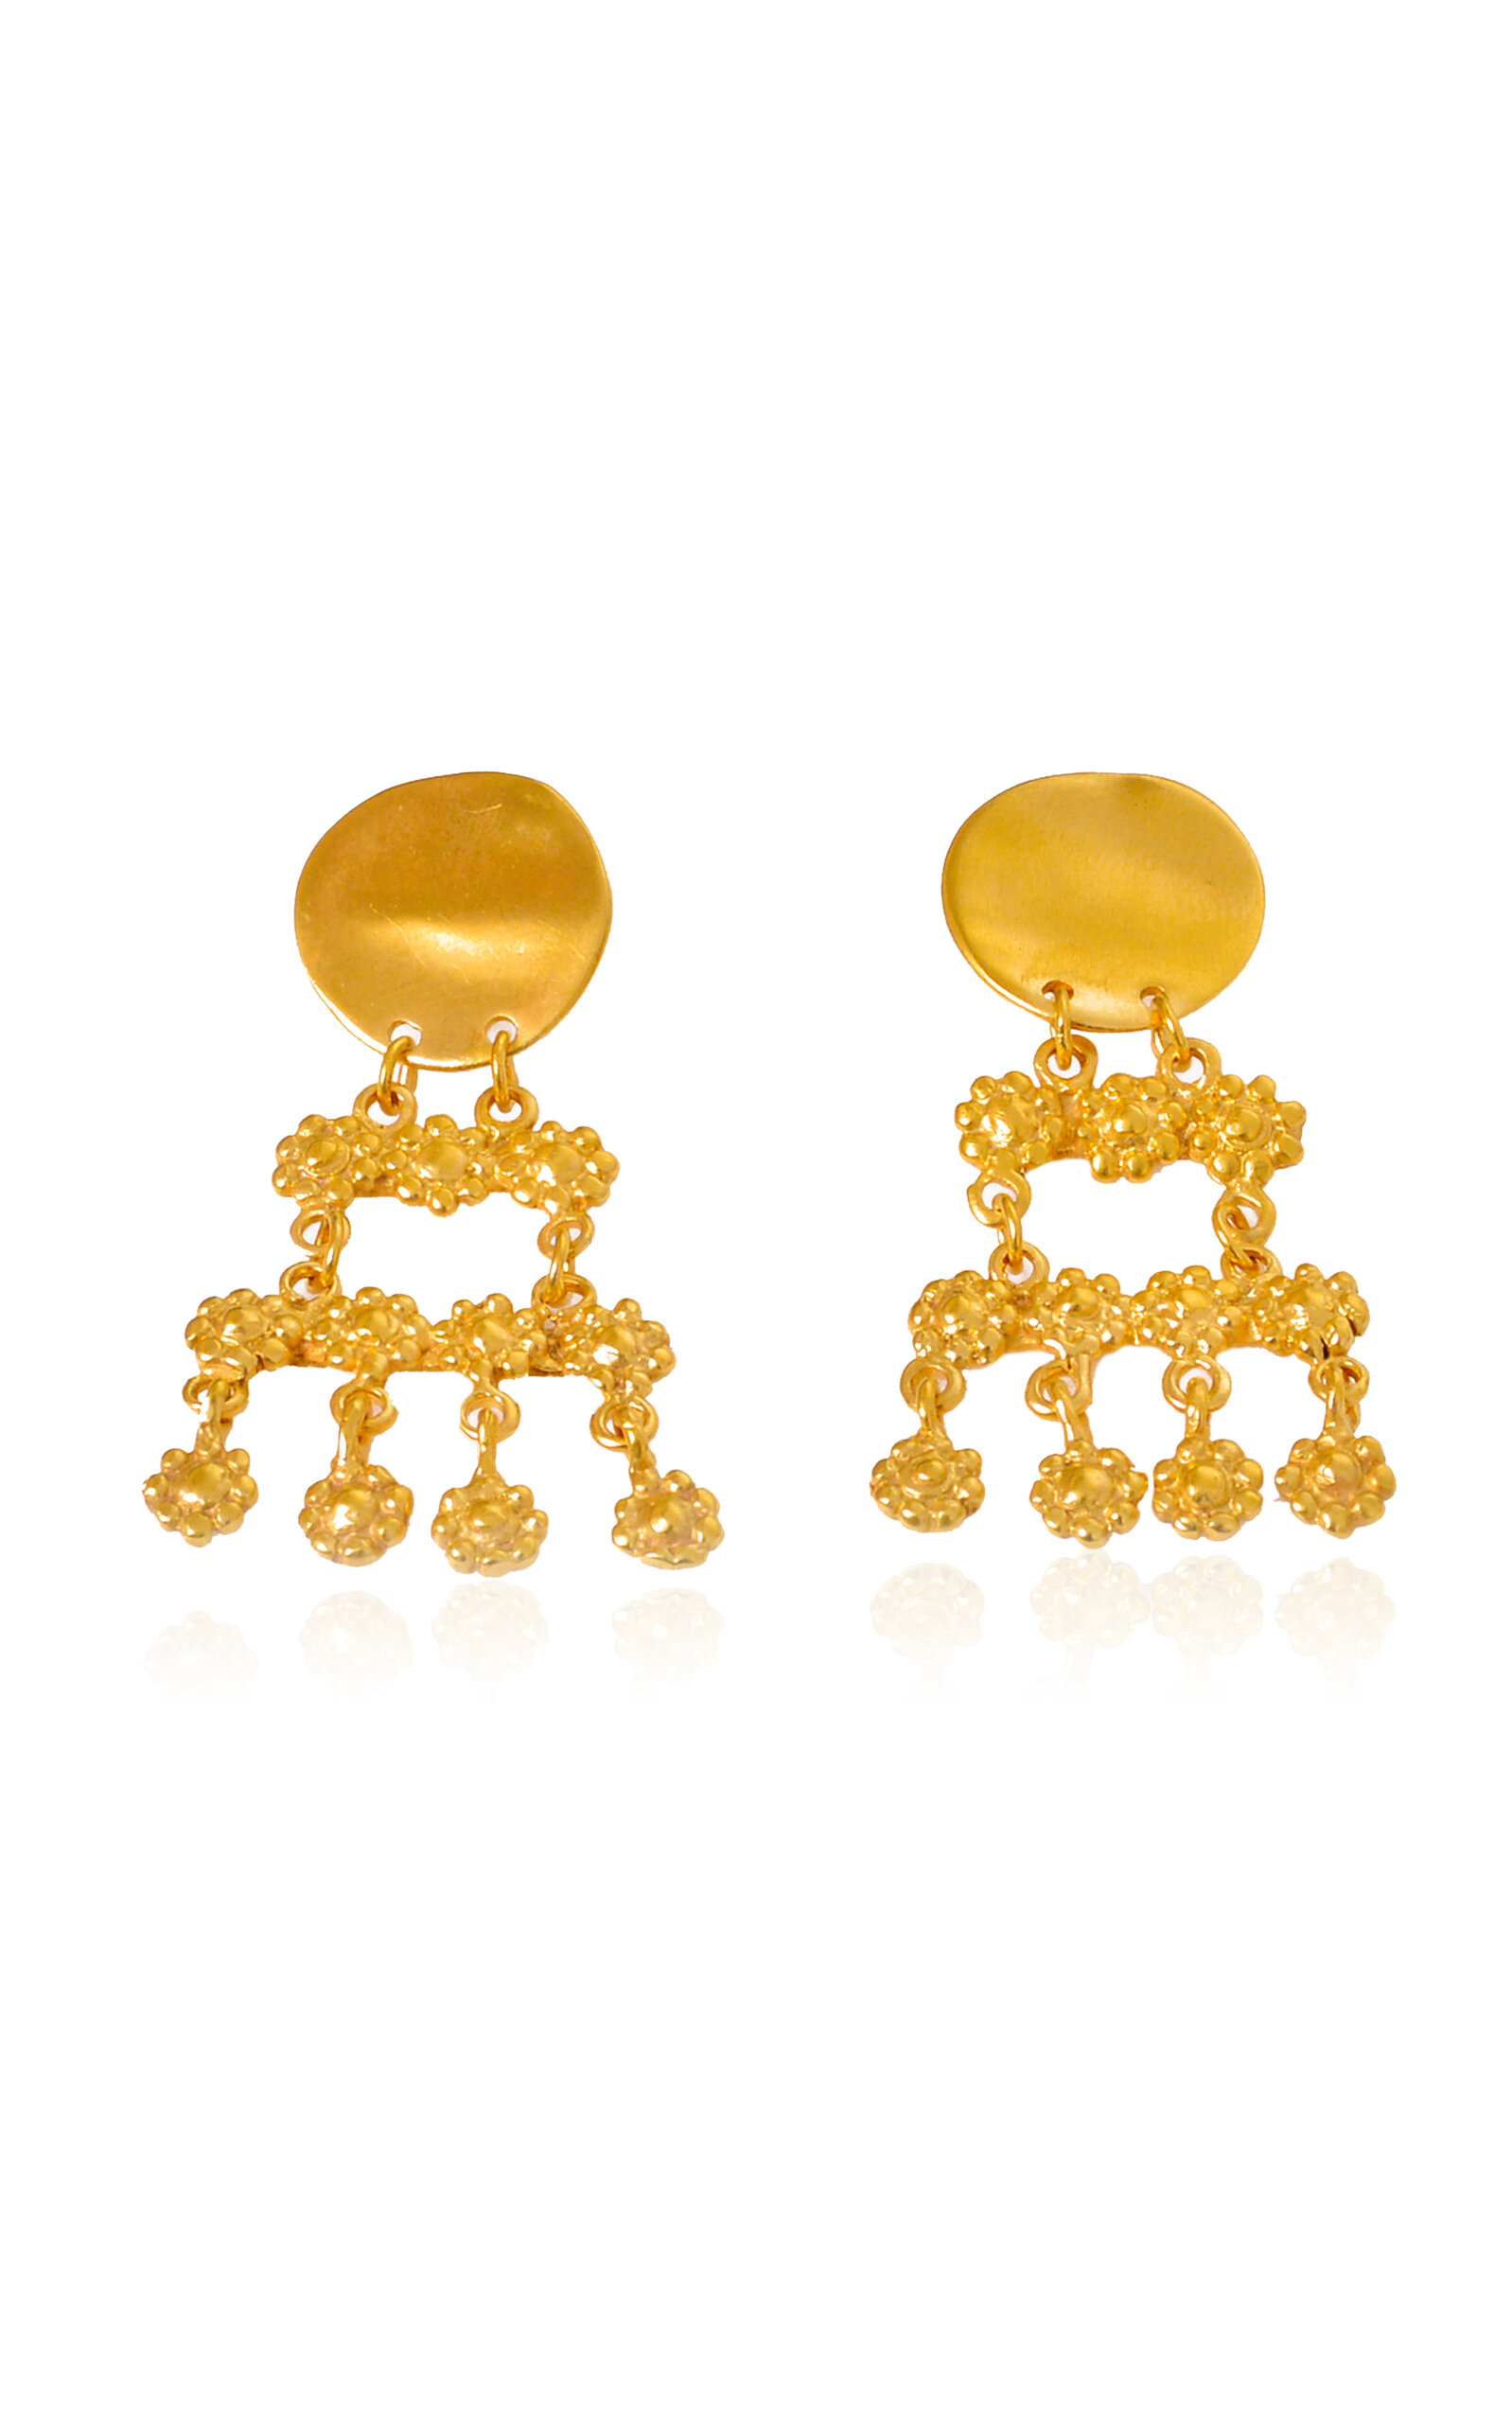 Kogui 24K Gold-Plated Earrings